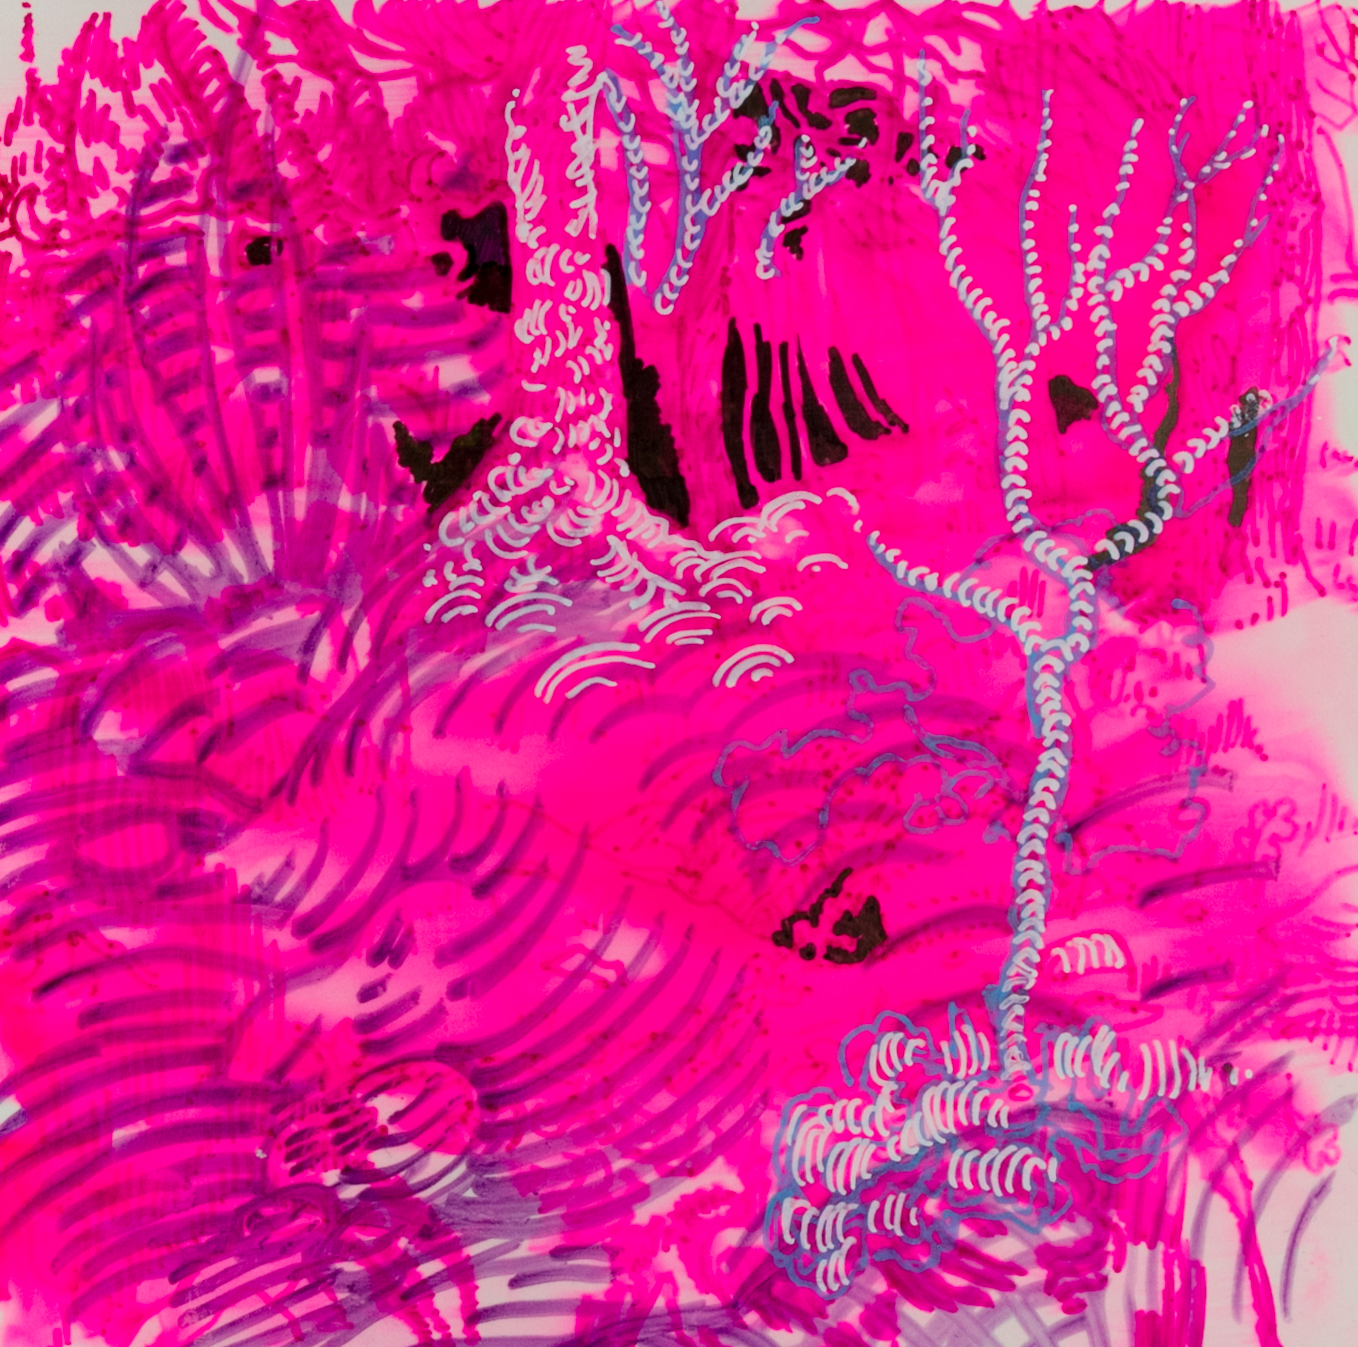  Neon Pink Woods series: Full Melt 